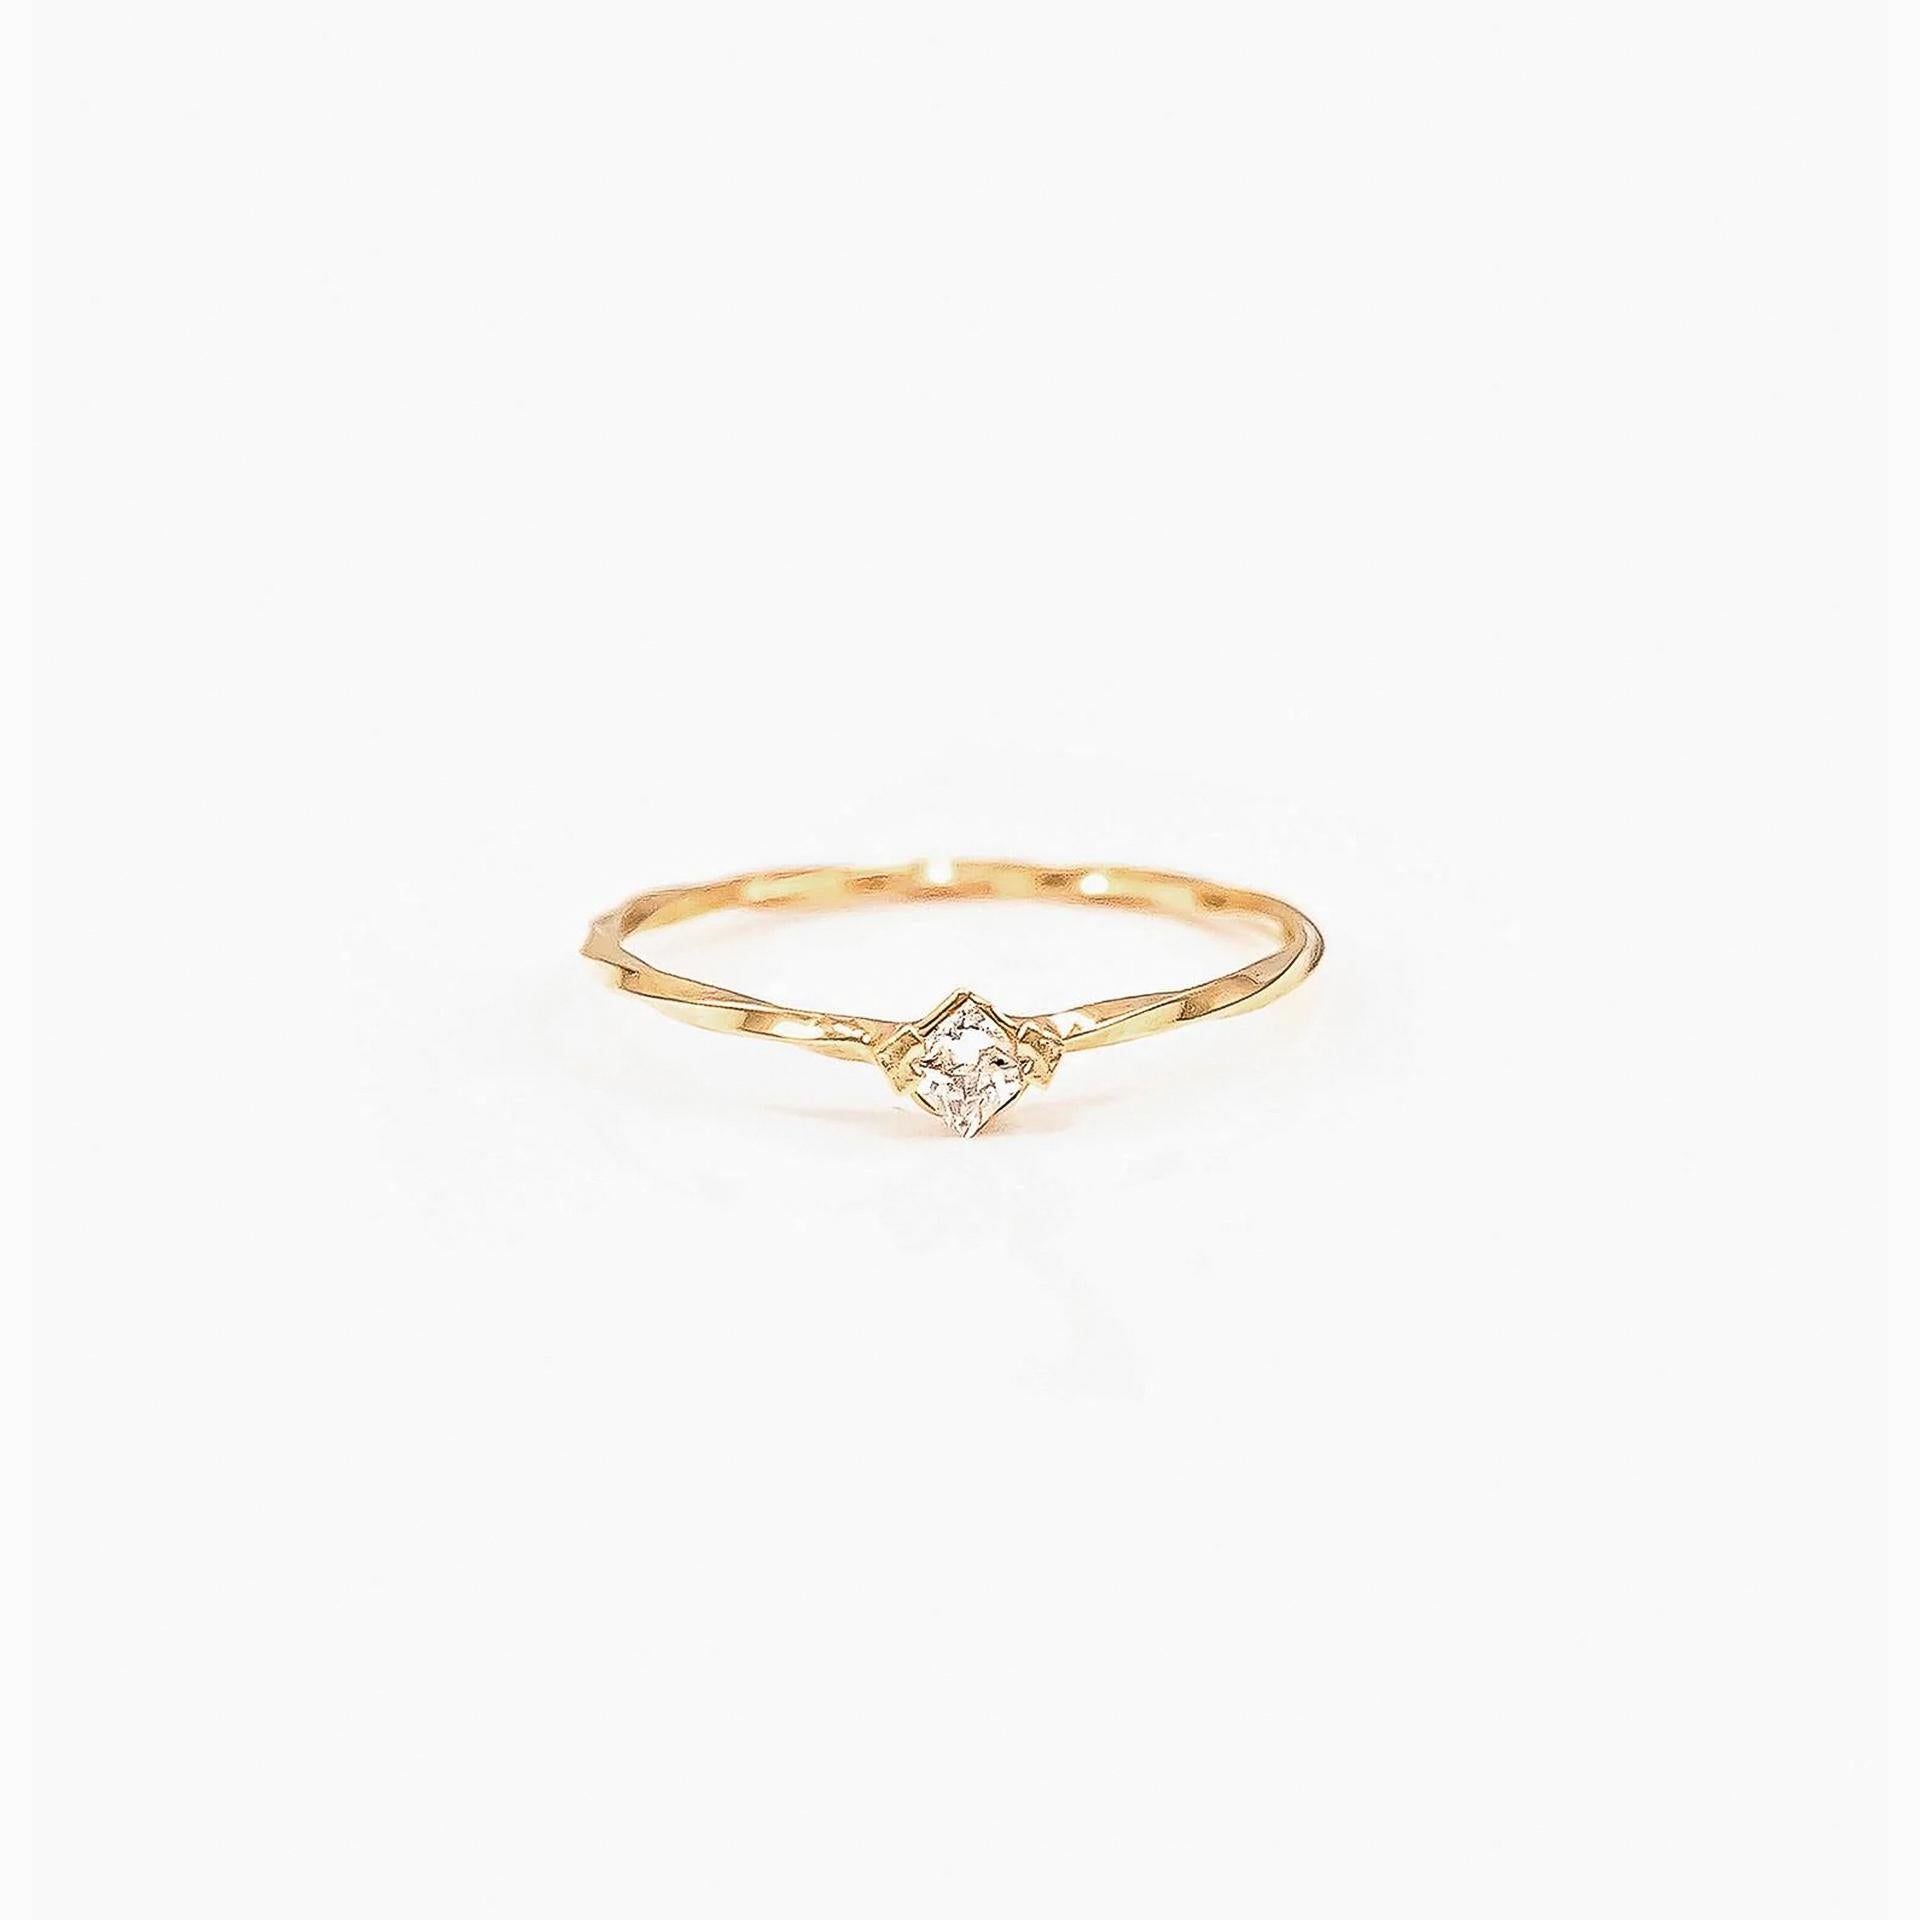 Buy Pearl Ring, Dainty Ring, Thin Gold Ring, Stacking Ring, Freshwater  Pearl Ring, Delicate Pearl Ring, Promise Ring, Stackable Ring, Thin Ring  Online in India - Etsy